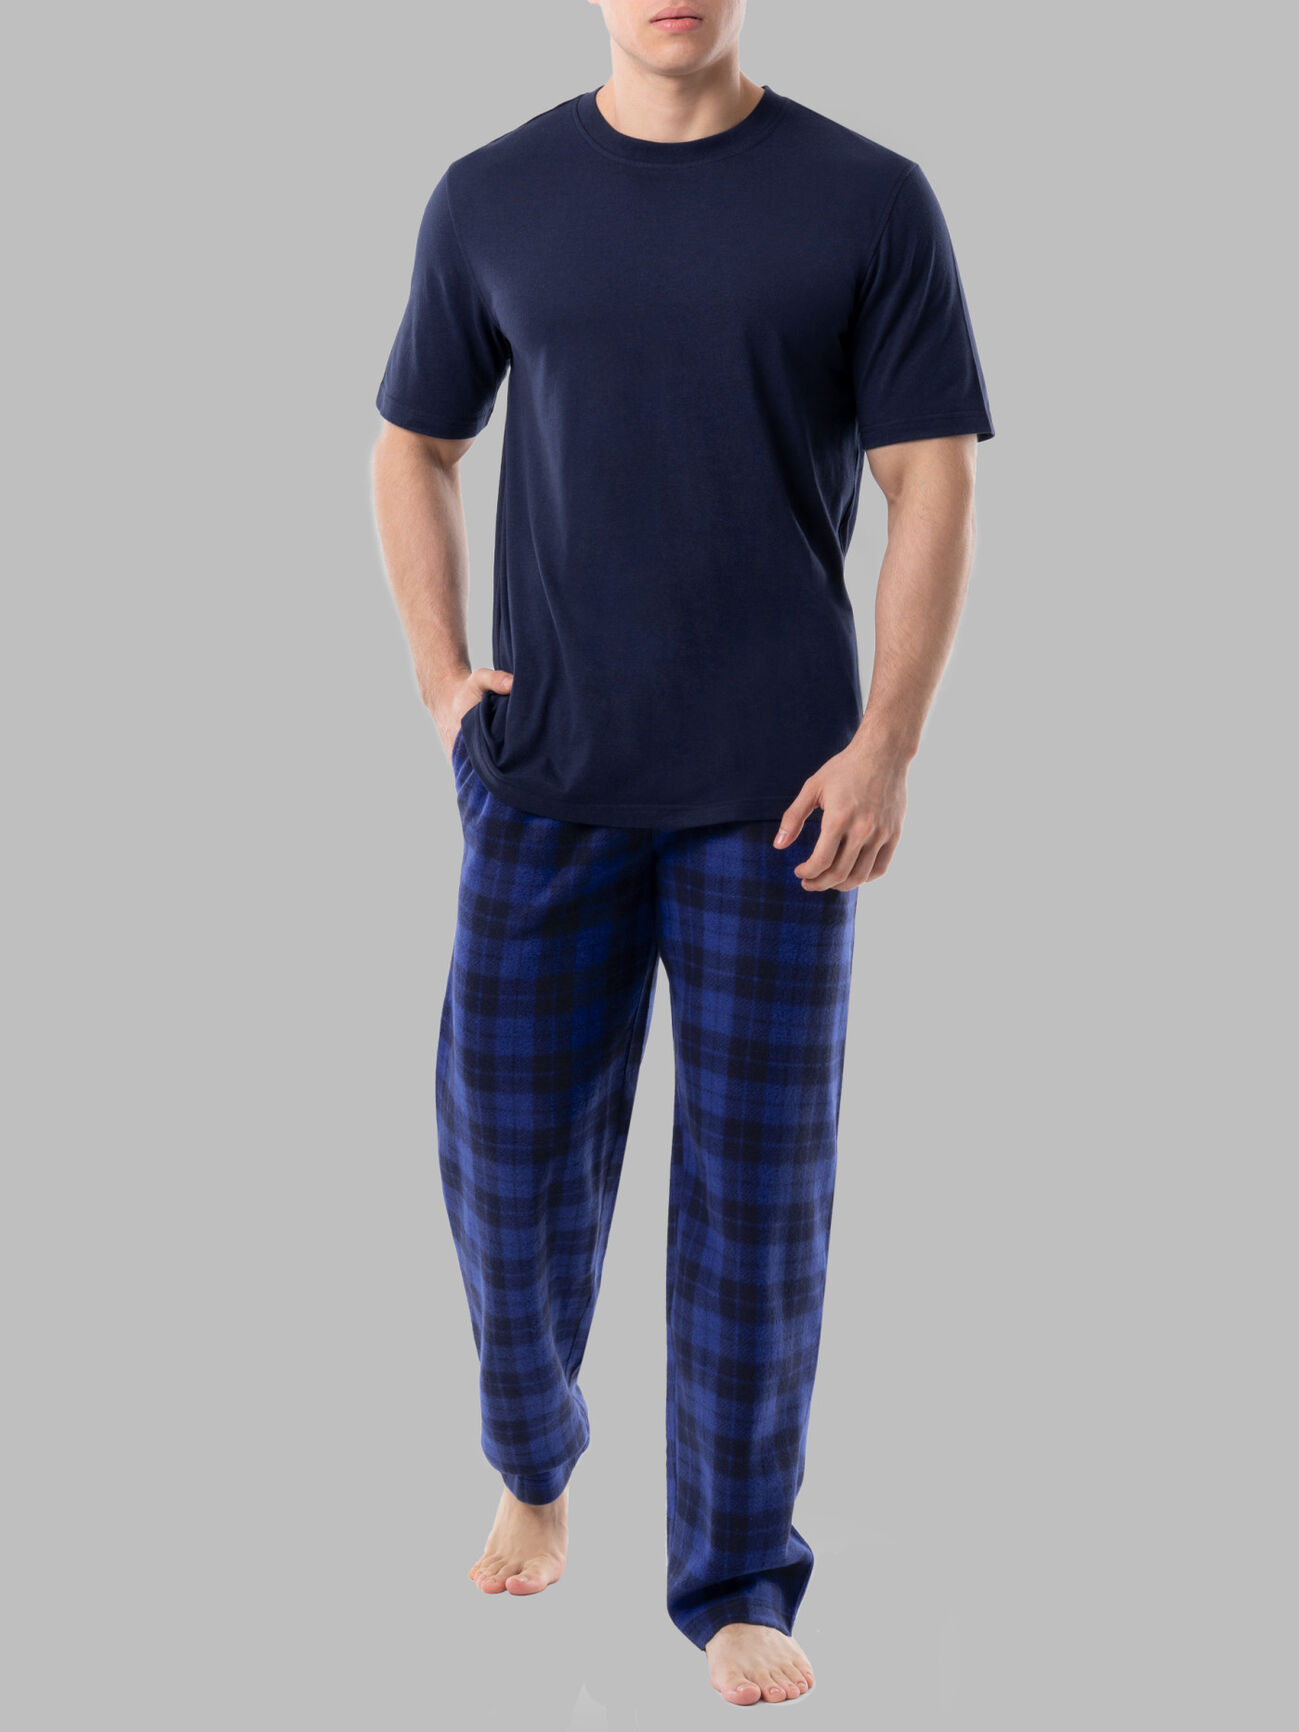 Lounge Pants for Women 3 Pack Sleep Casual Sleep Bottom Pajama Pants Set A,  Small